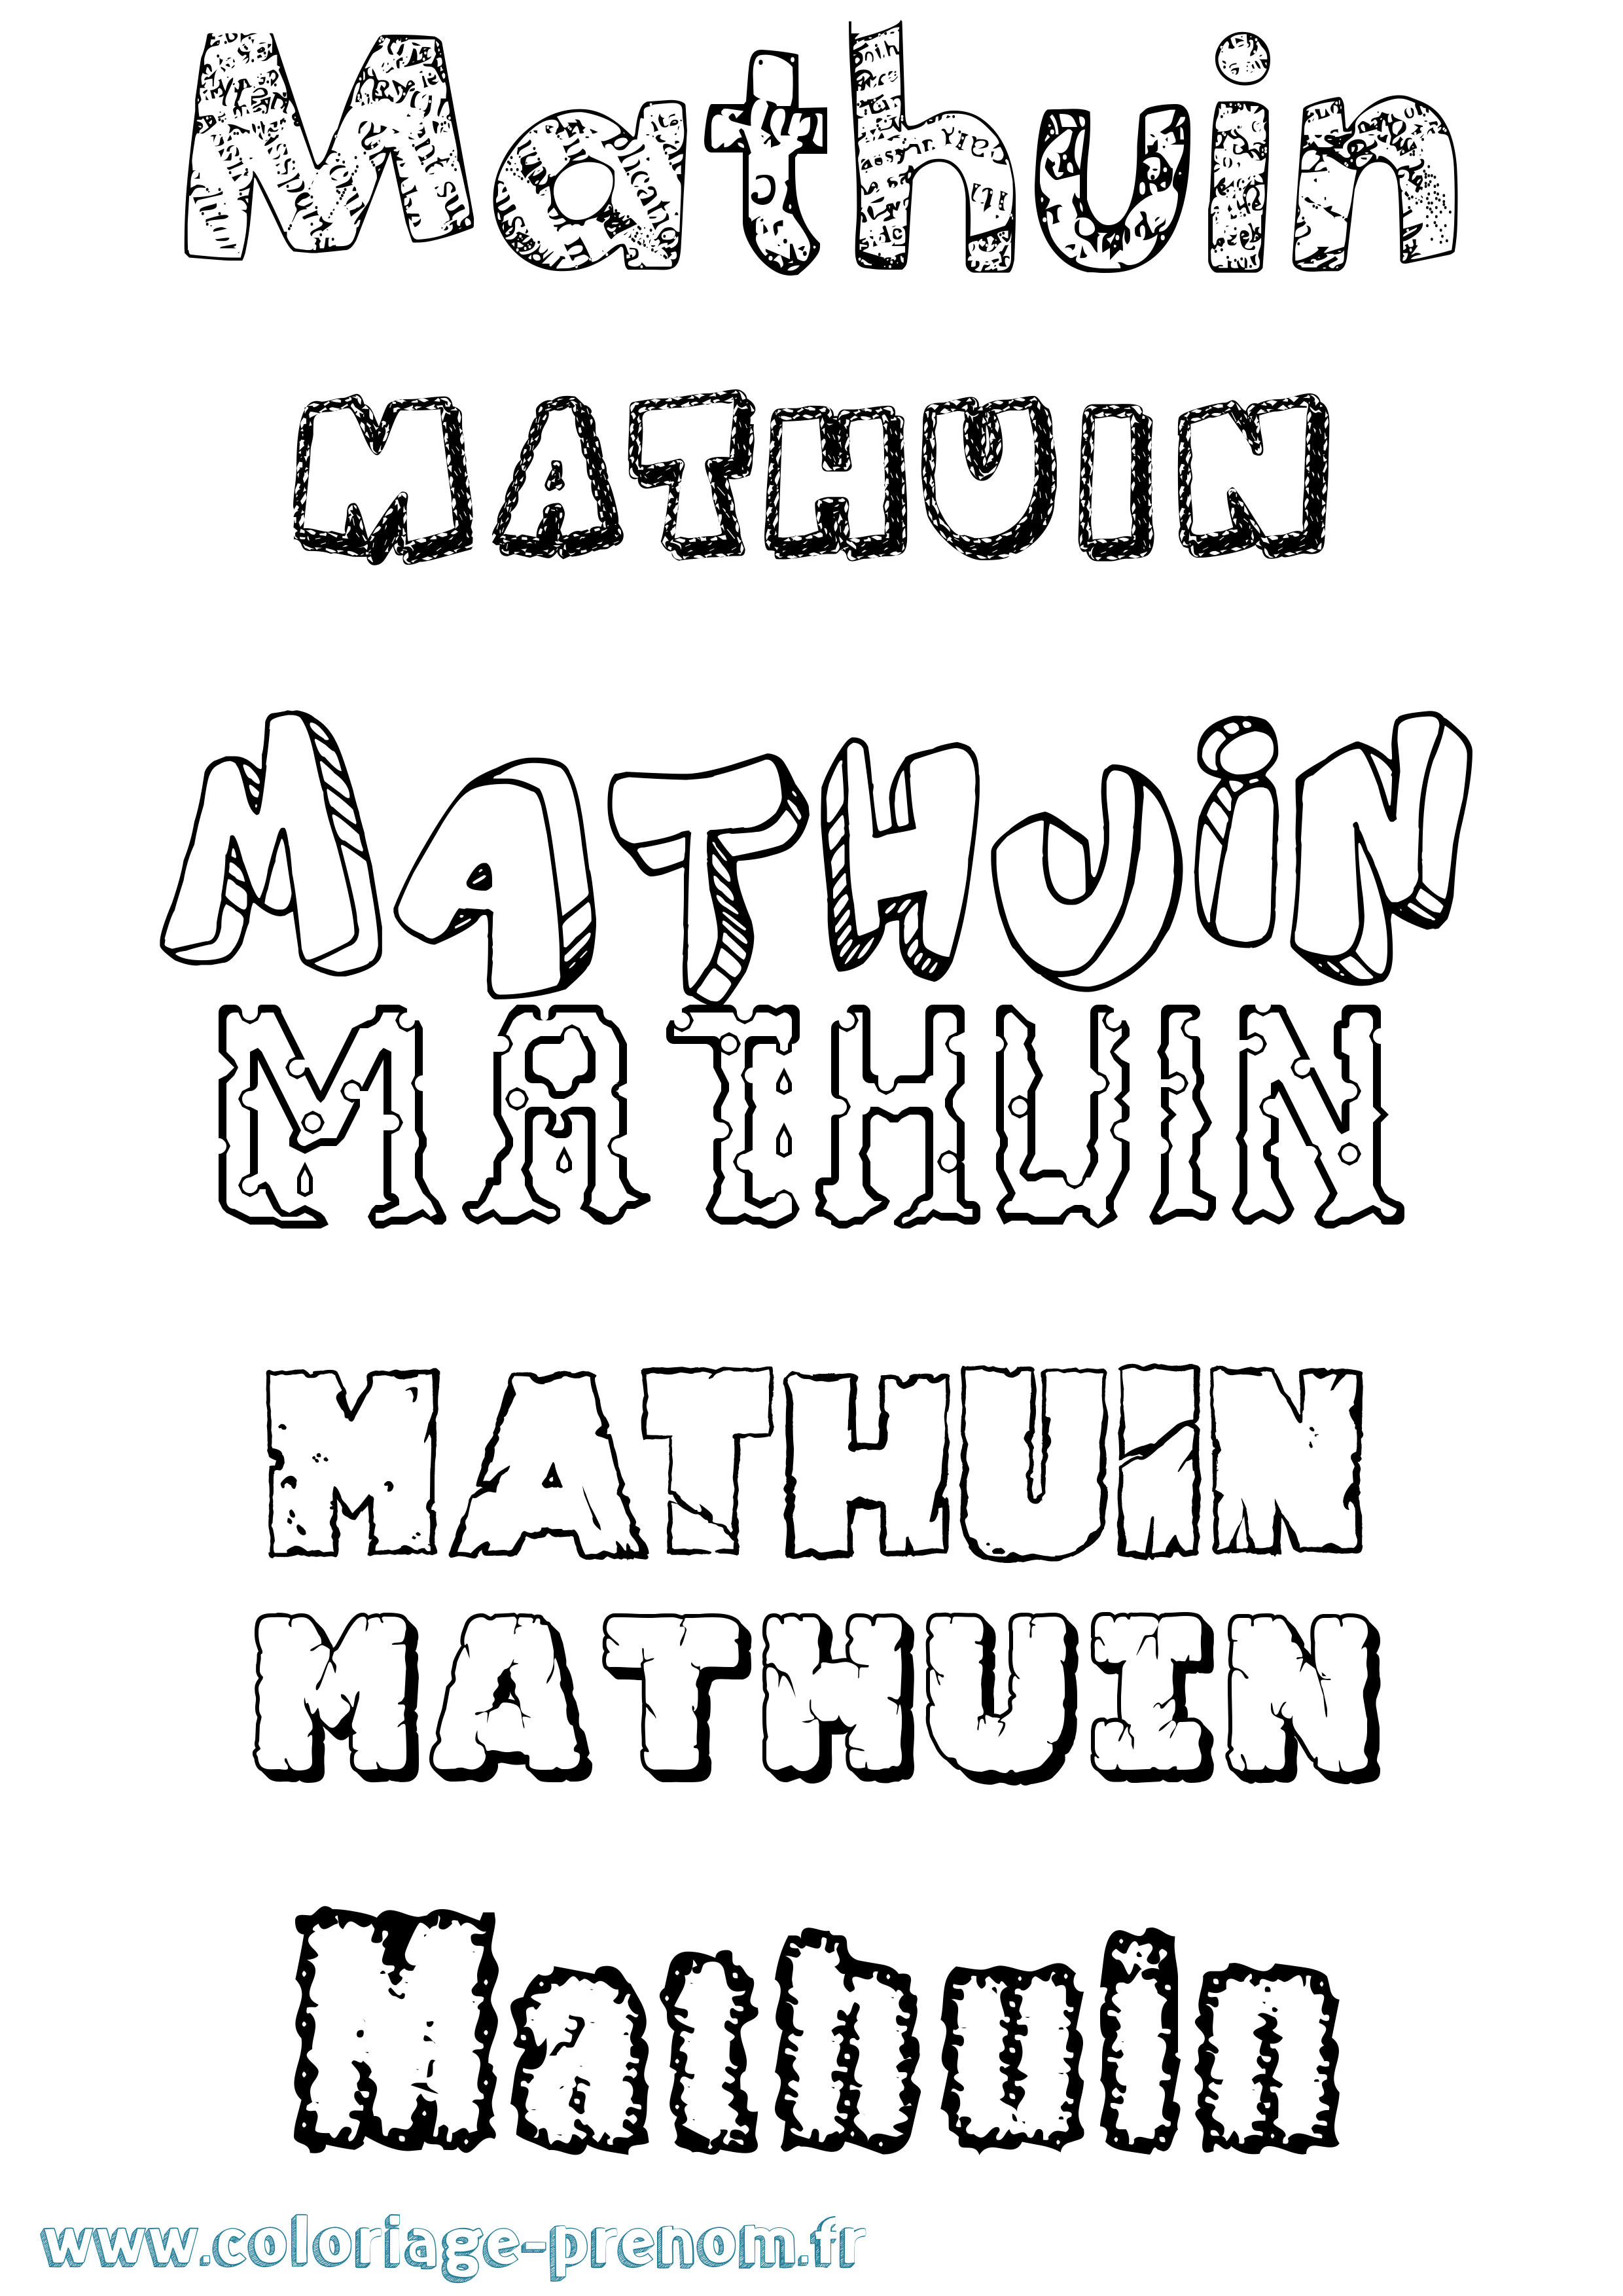 Coloriage prénom Mathúin Destructuré